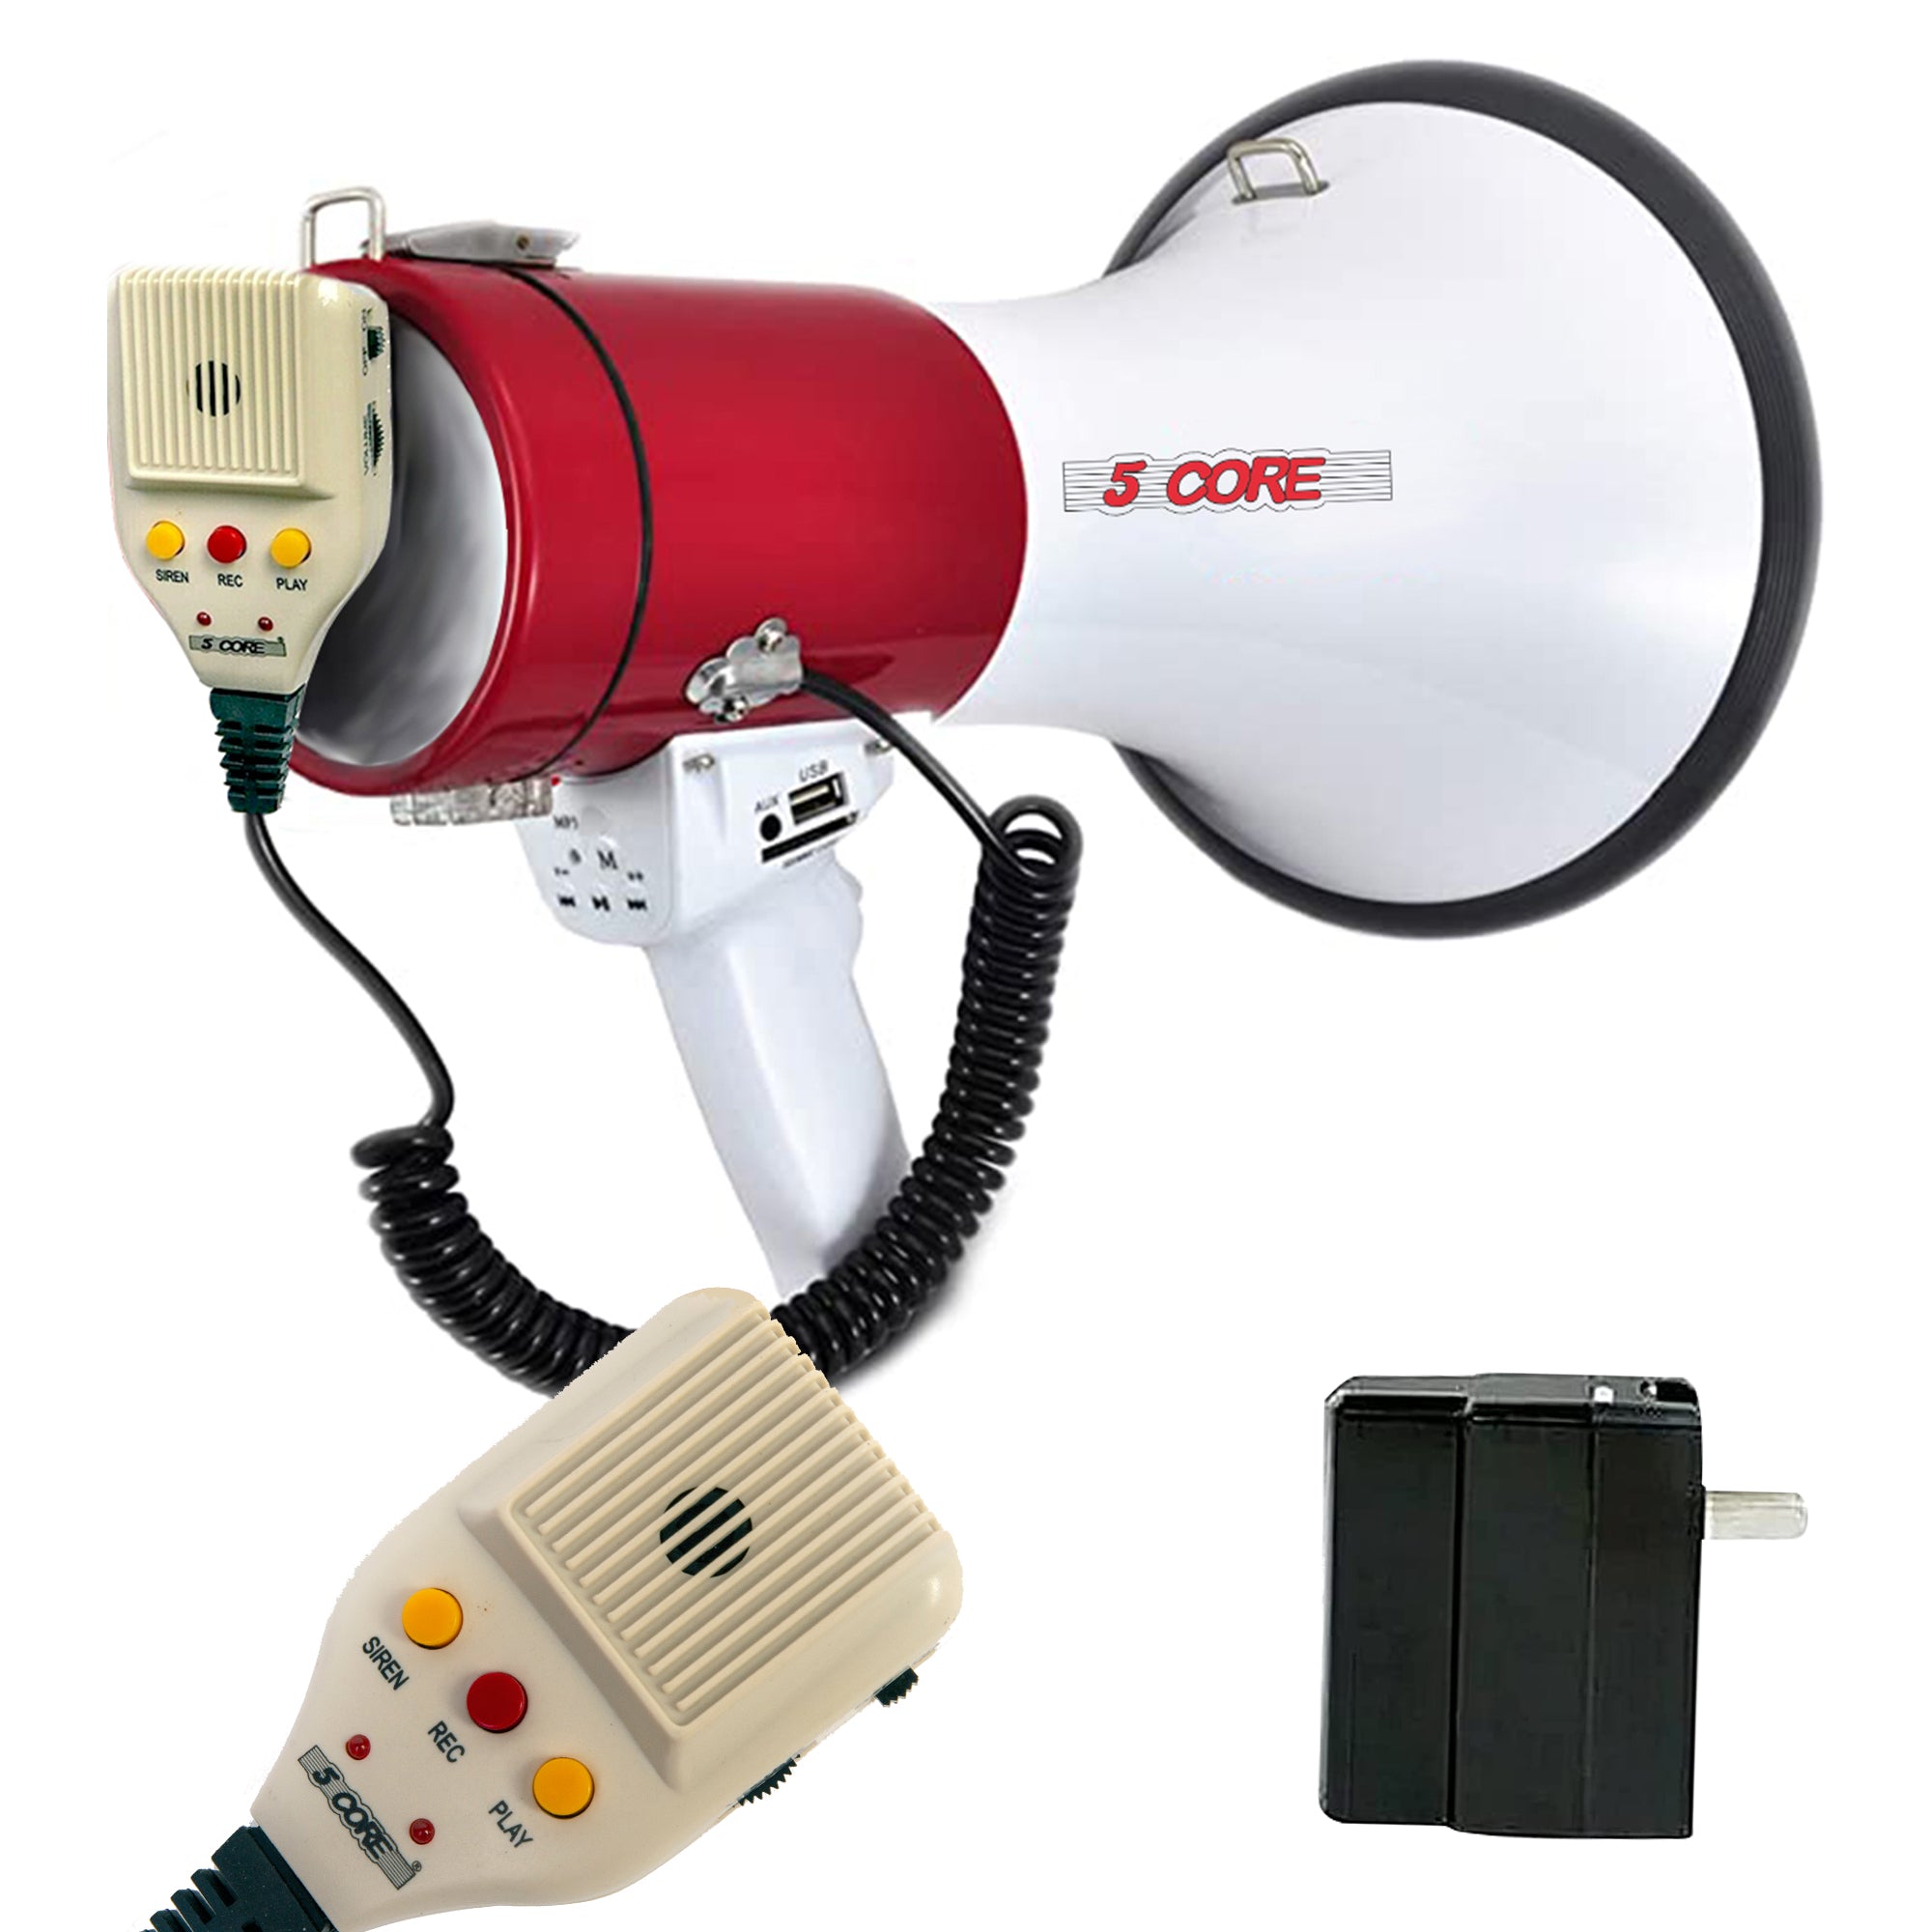 5 Core Megaphone Speaker Bull horn 60W Rechargeable Bullhorn w Recording Volume Control & Loud Siren